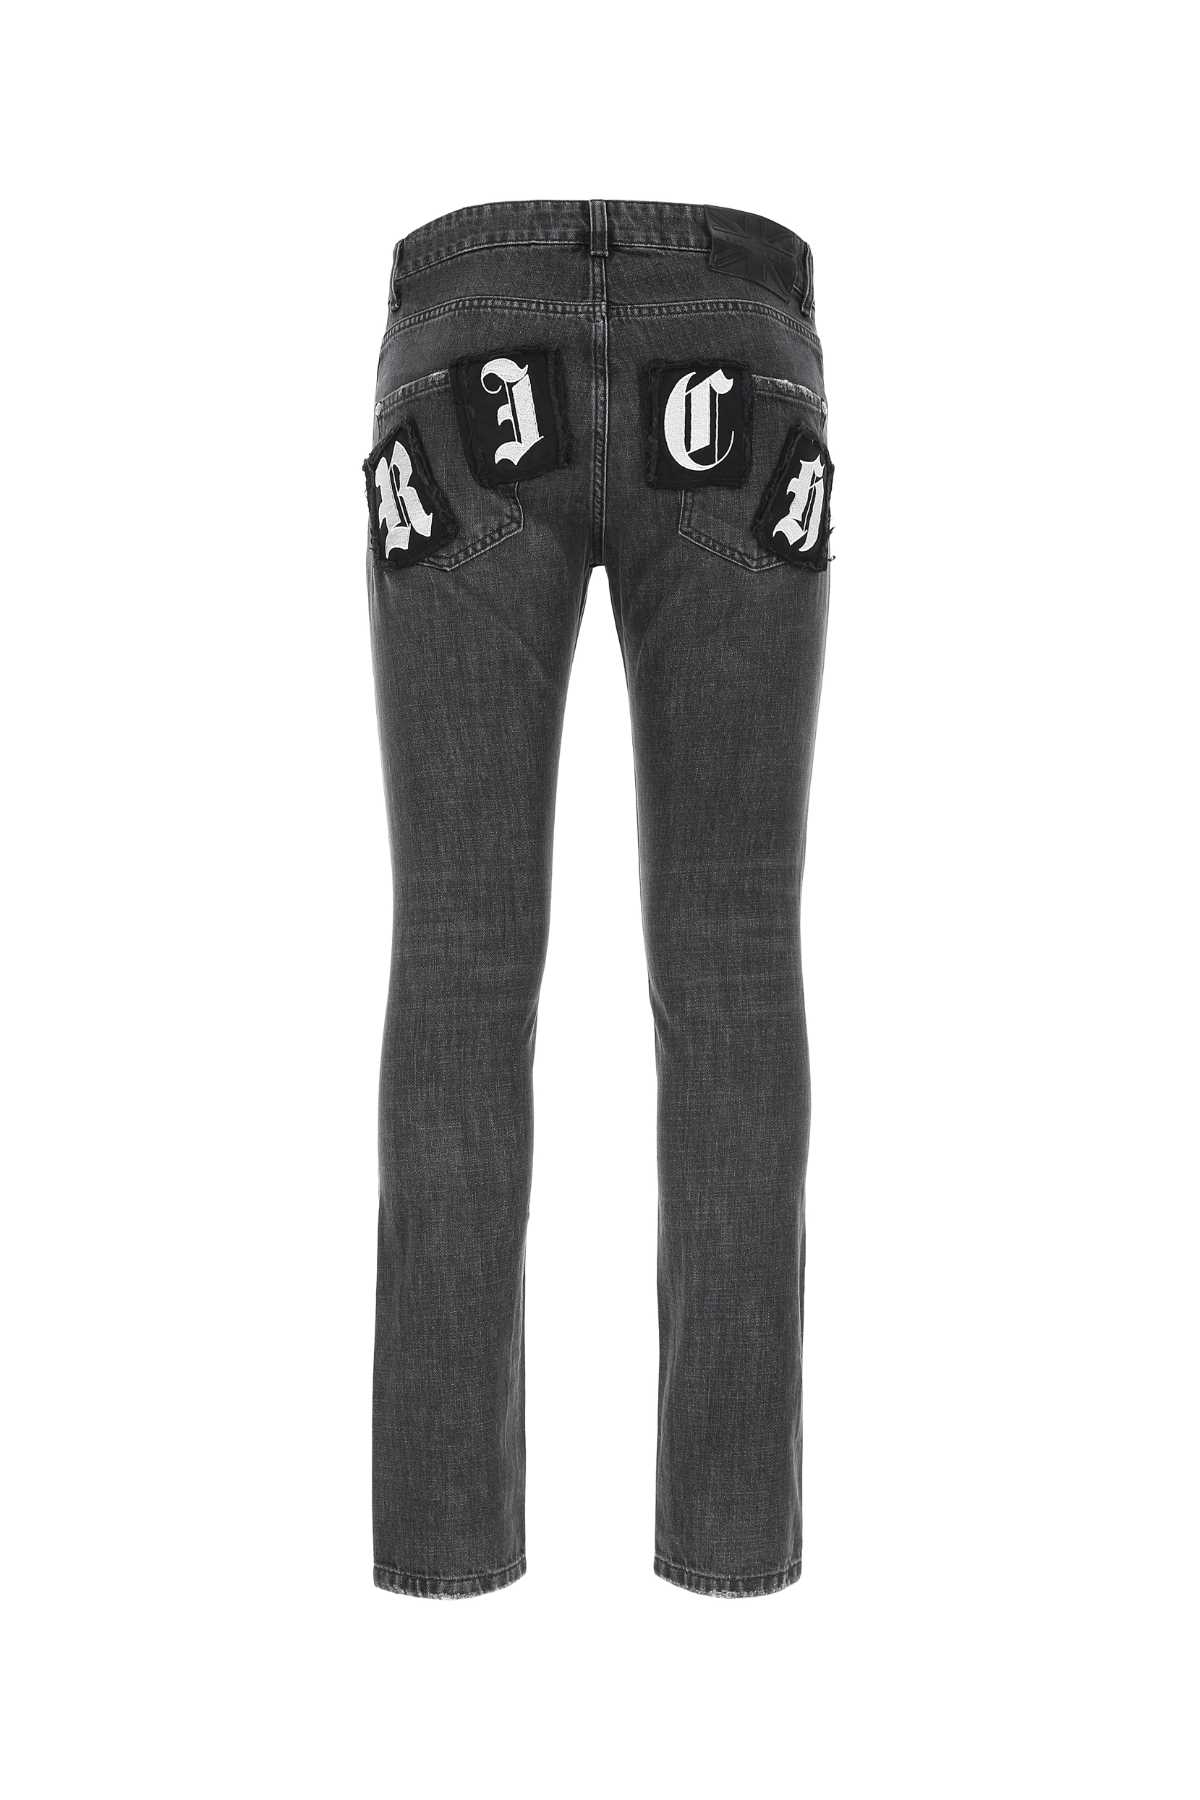 John Richmond Charcoal Grey Denim Jeans In Dblack